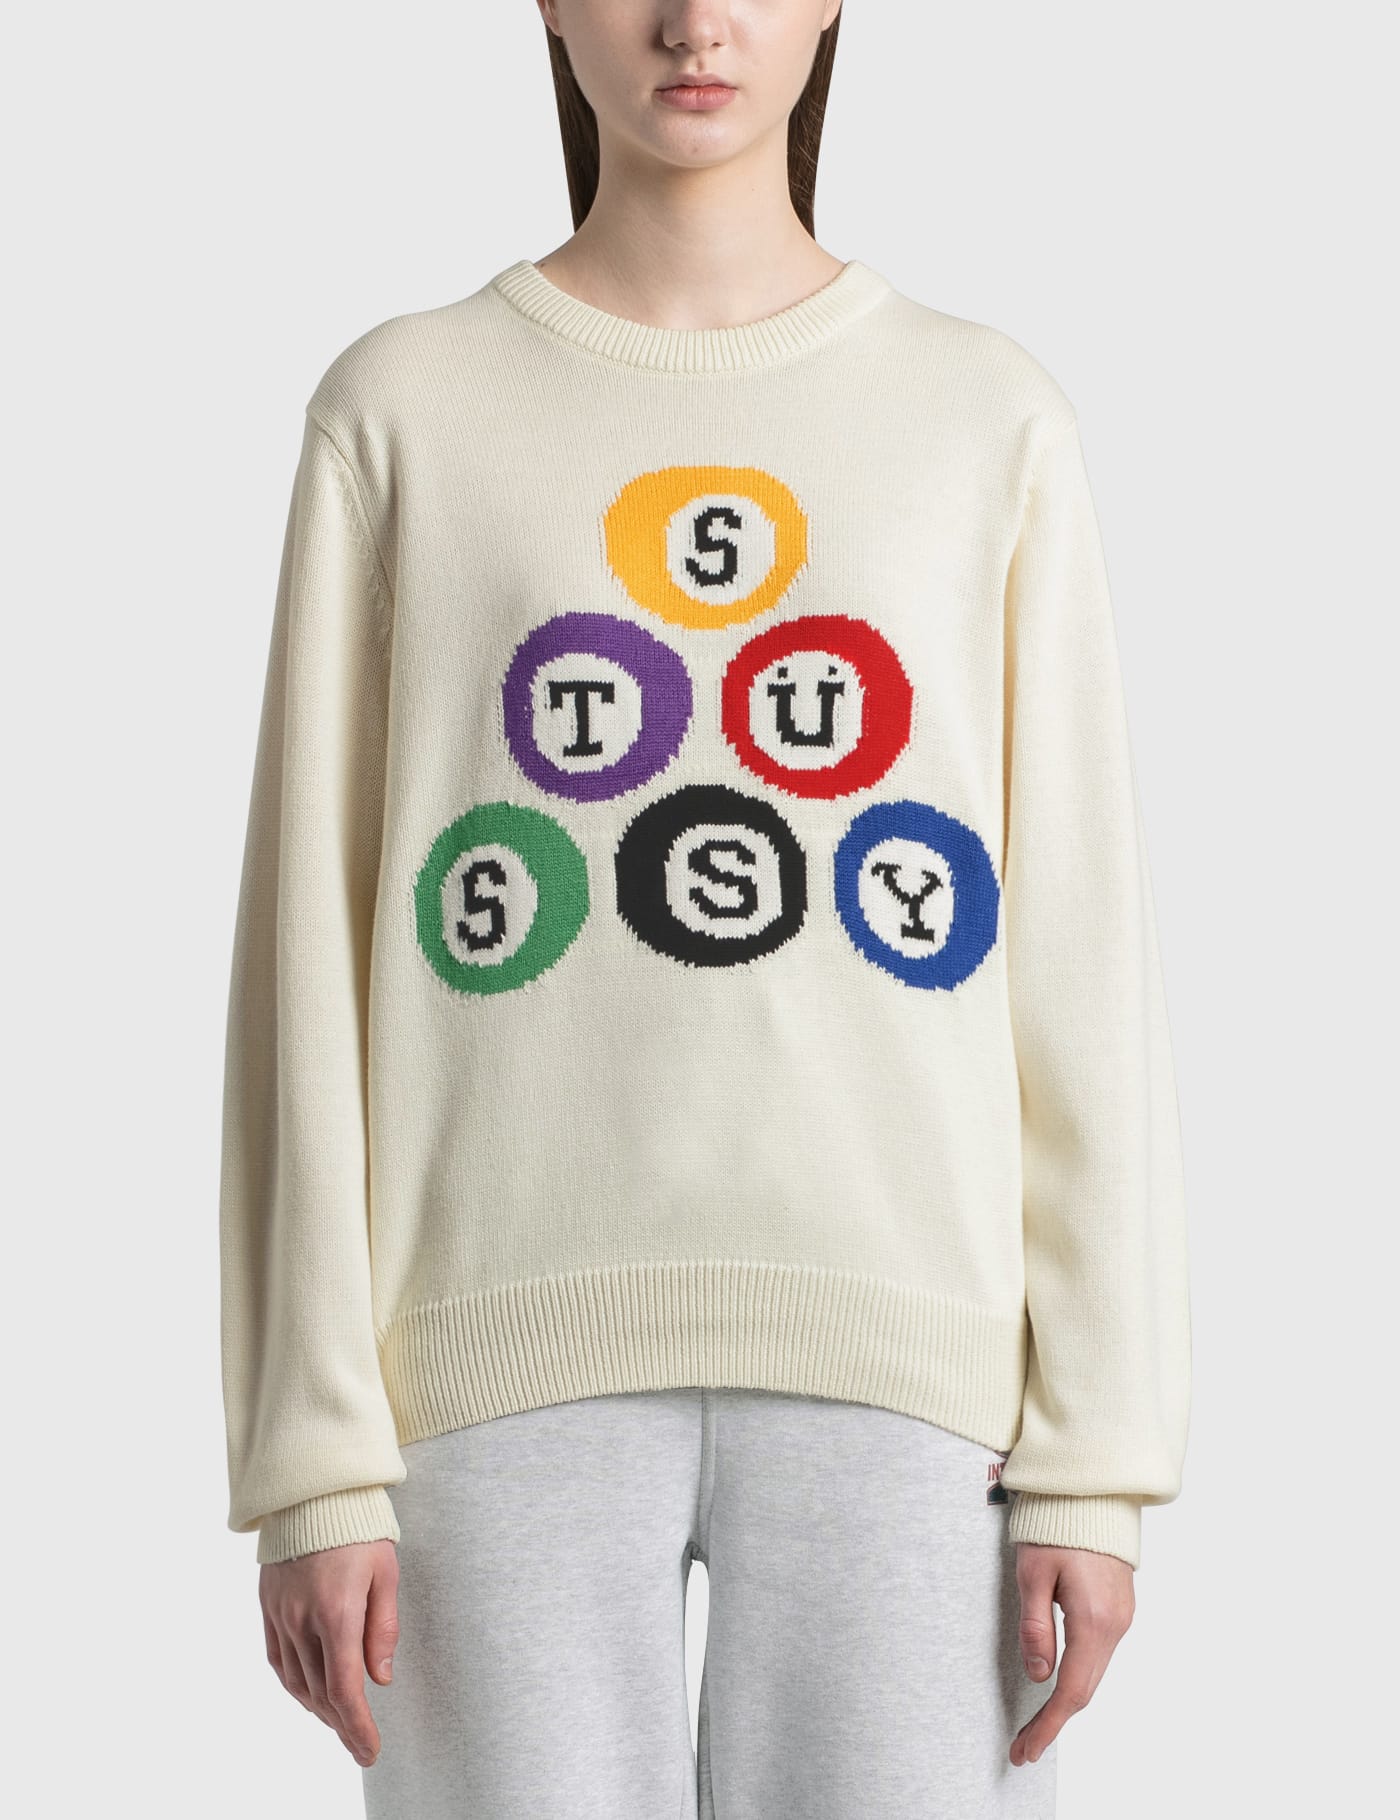 Stüssy - Stussy Billiard Sweater | HBX - Globally Curated Fashion